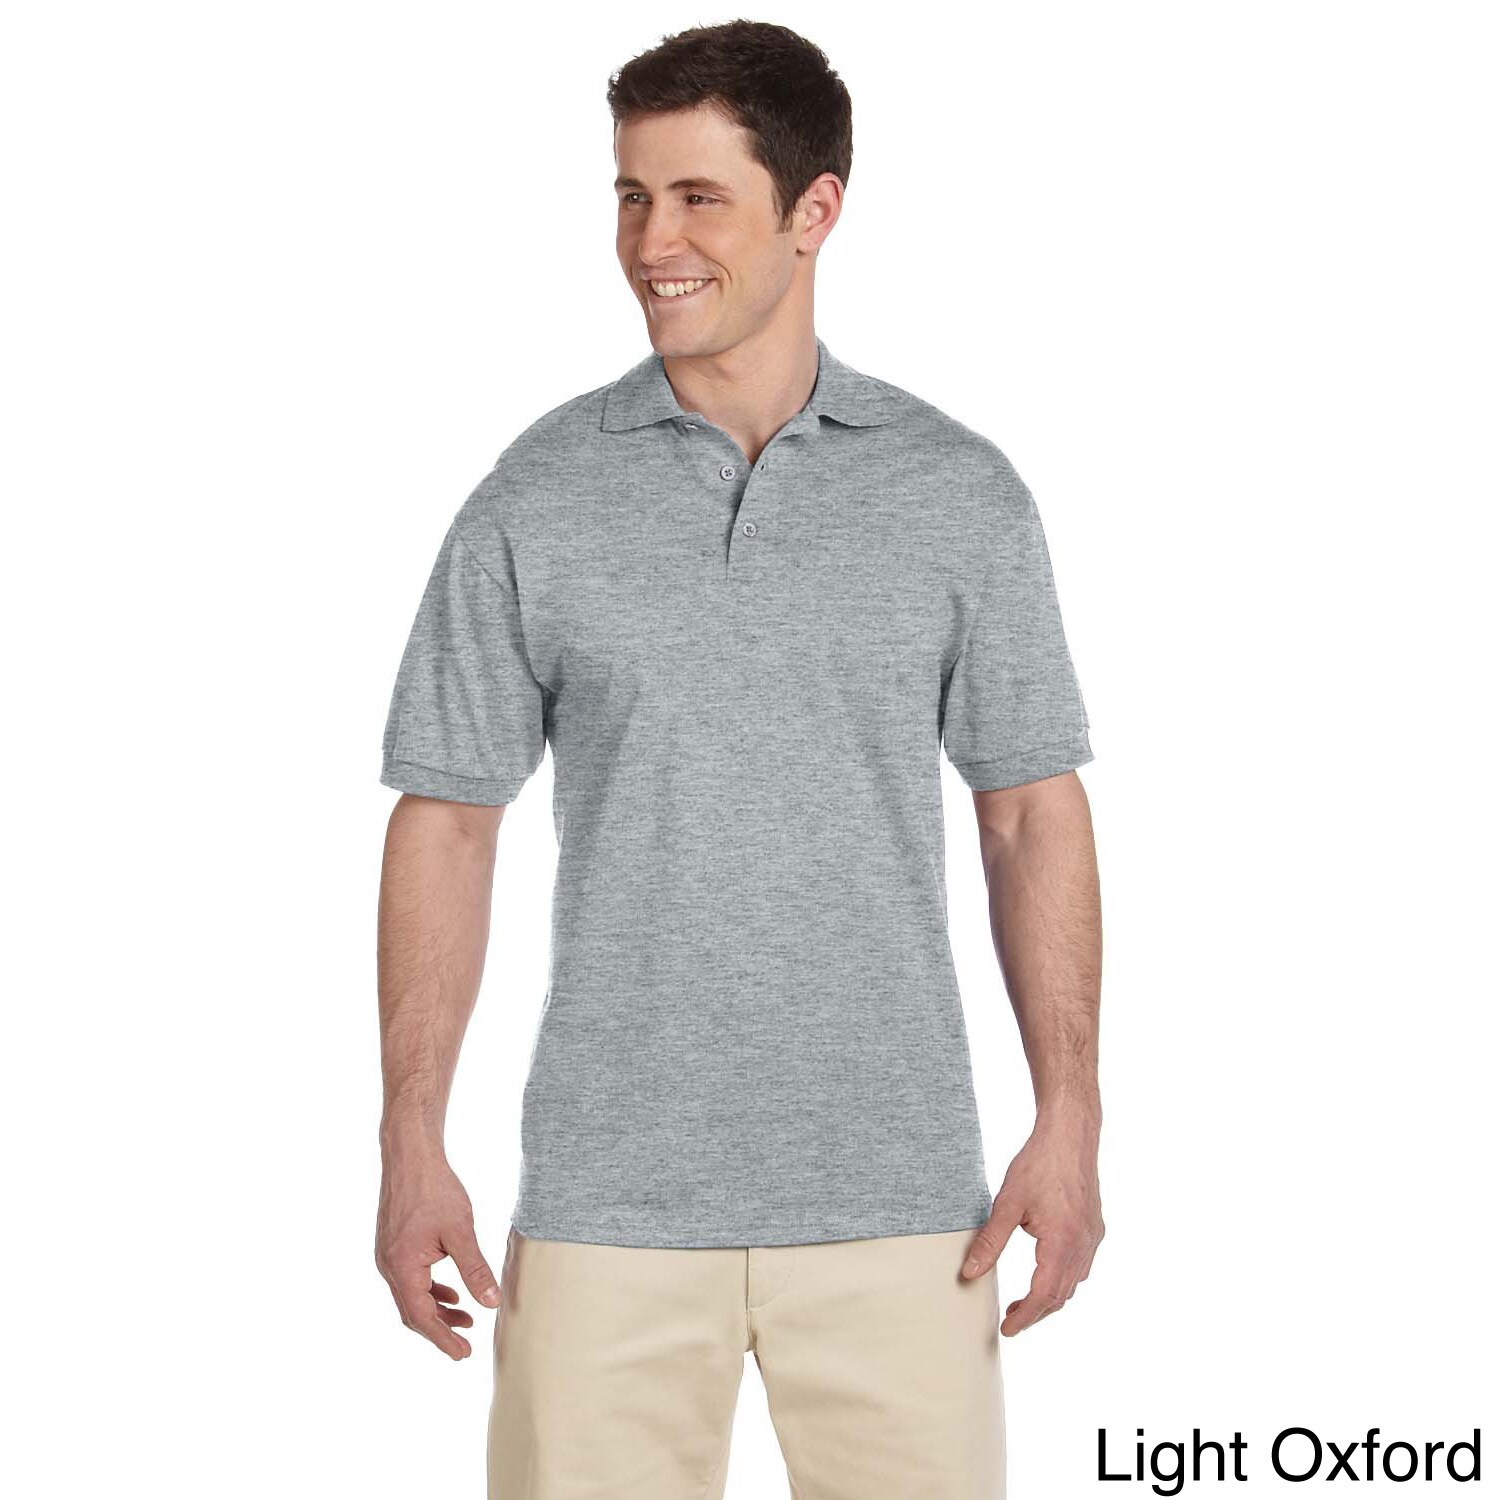 Mens Heavyweight Cotton Jersey Polo Shirt